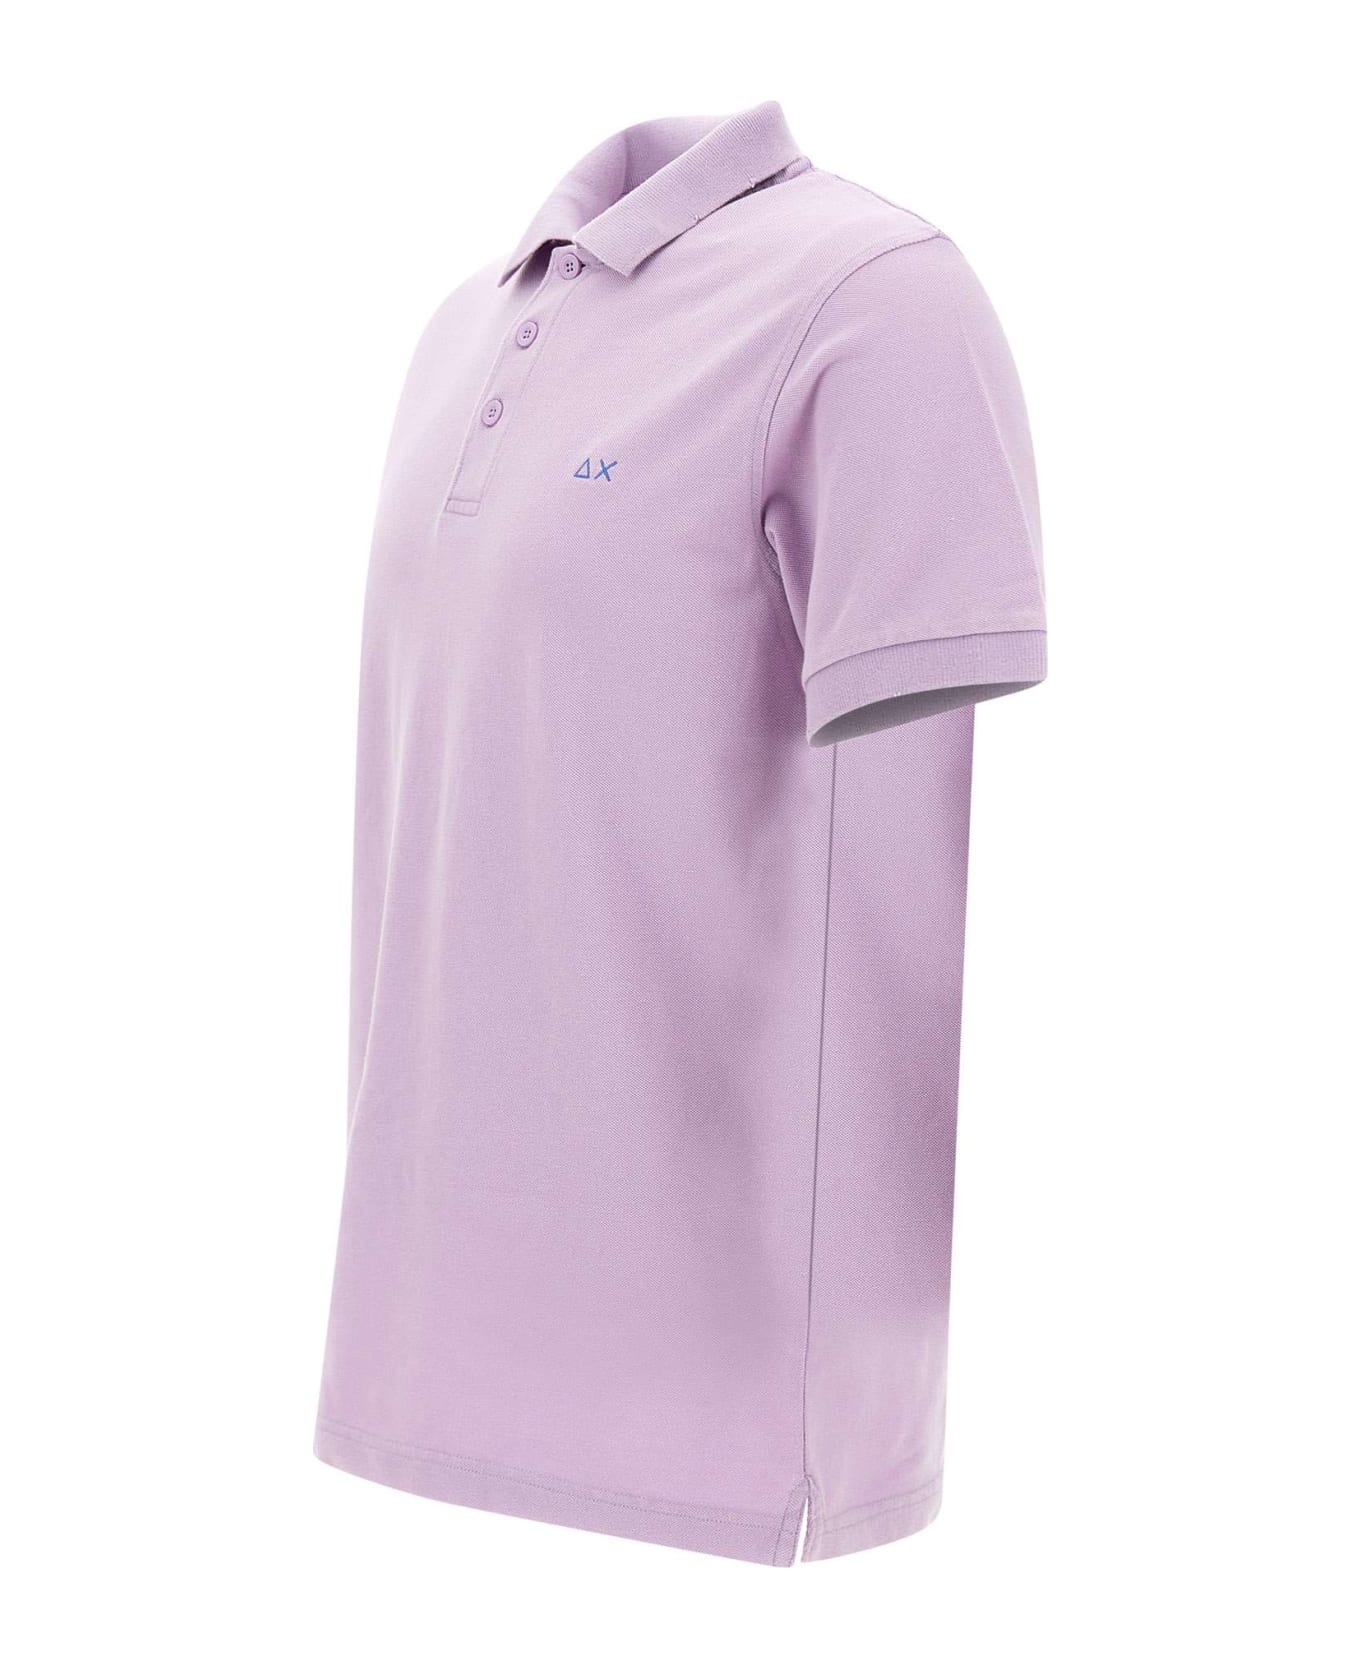 Sun 68 "solid" Polo Shirt Cotton - LILAC